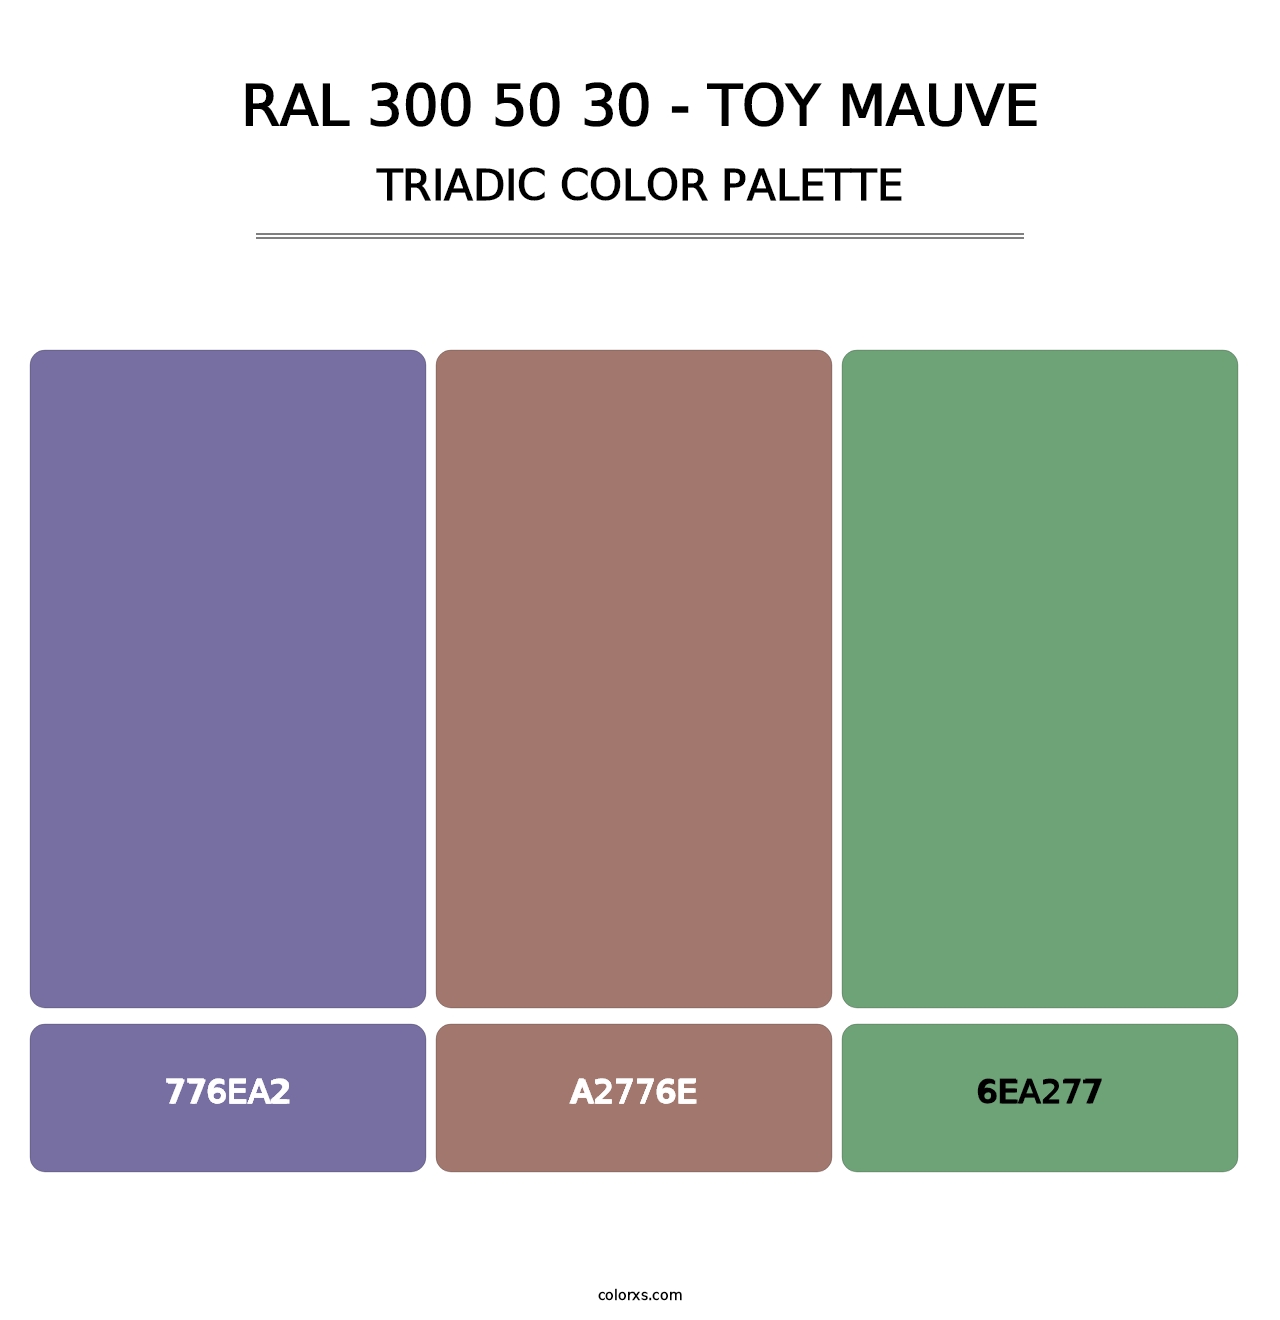 RAL 300 50 30 - Toy Mauve - Triadic Color Palette